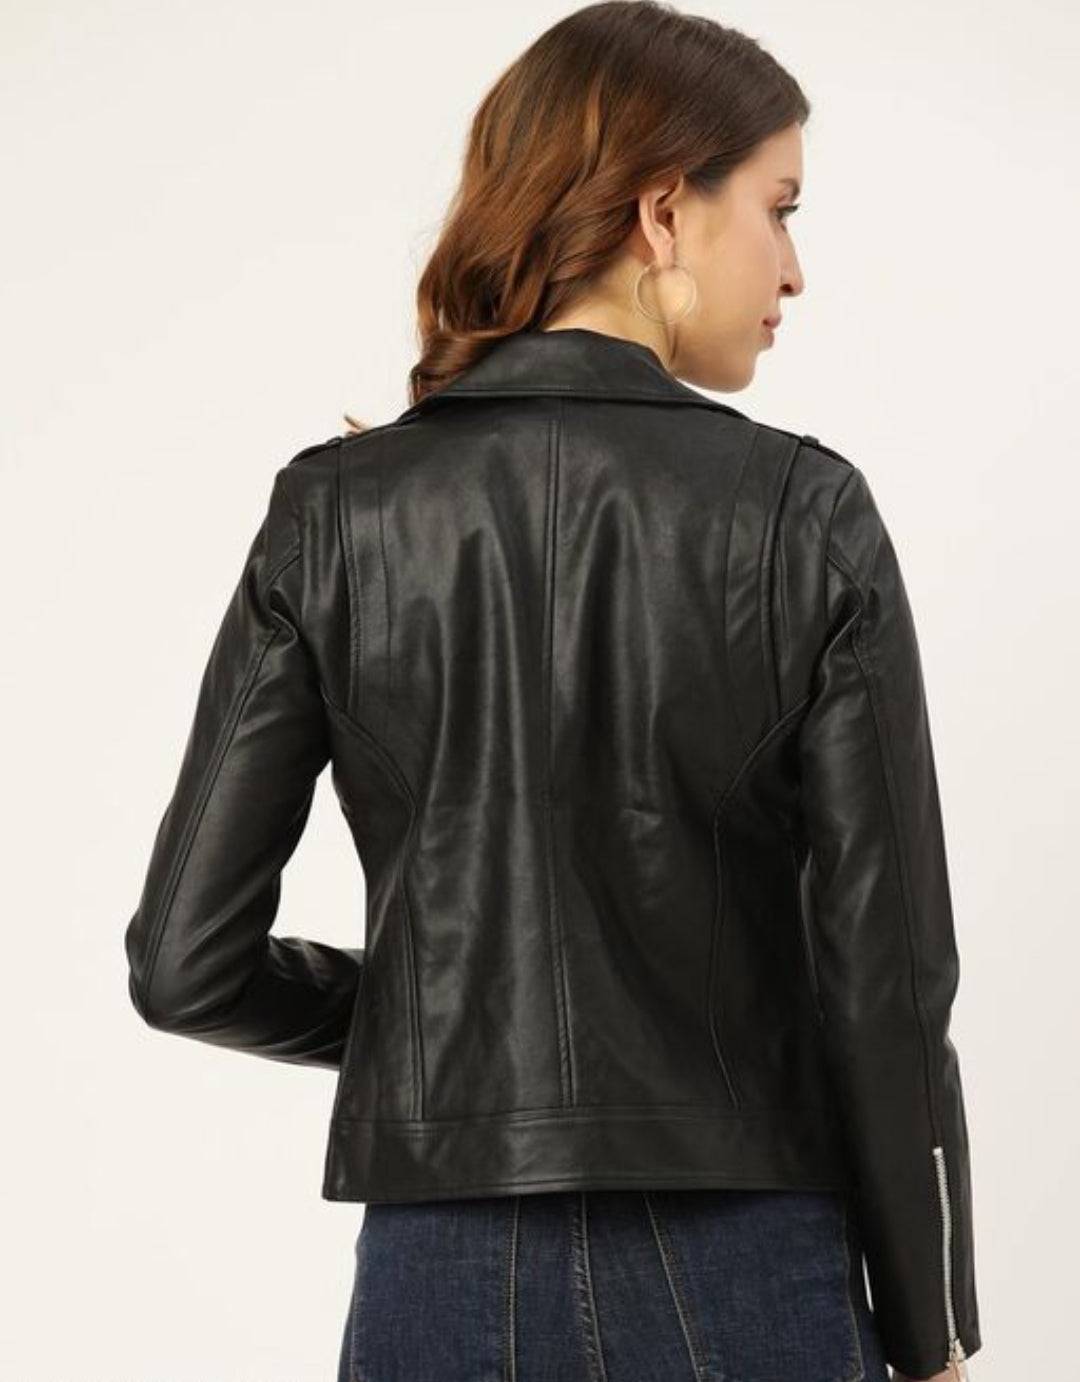 Hot Raven Premium Leather Jacket